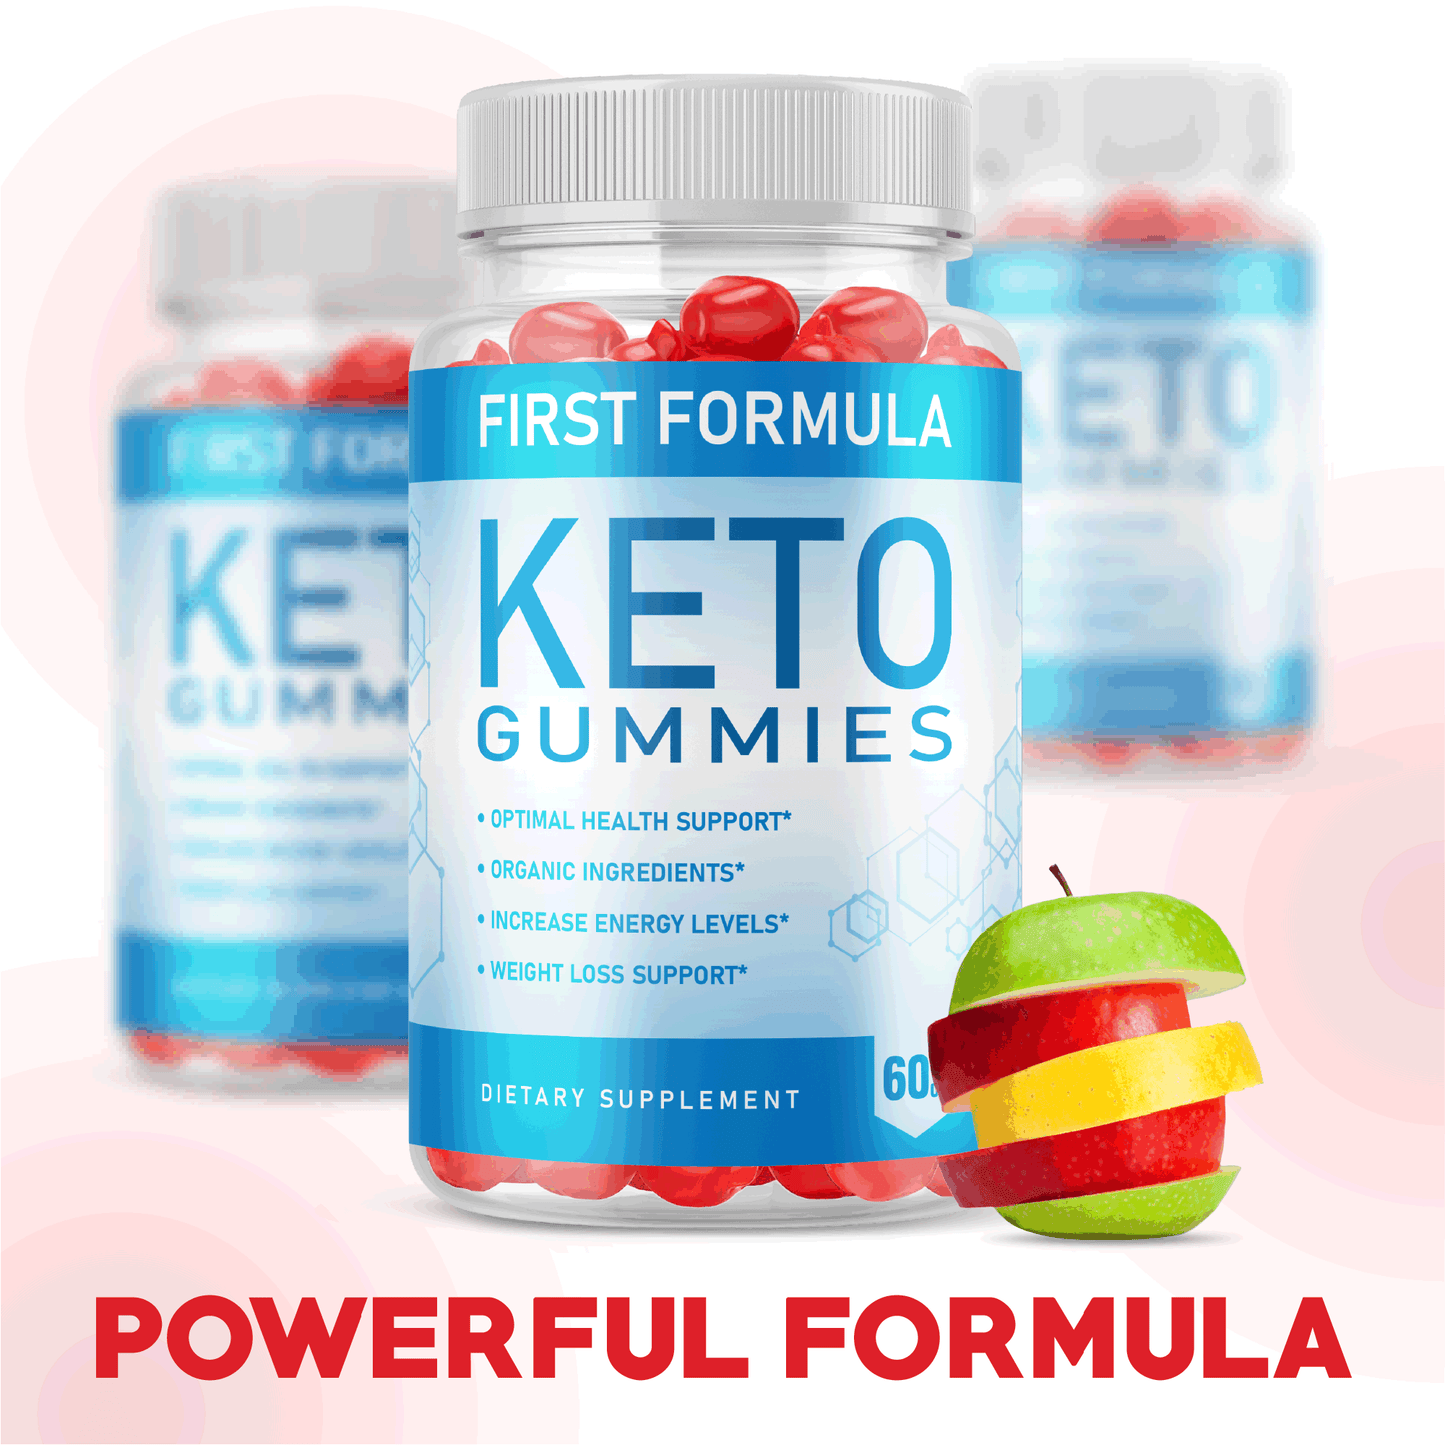 2pk First Formula ACV Gummies First Formula Keto Fat Burner Gummie Weight Loss